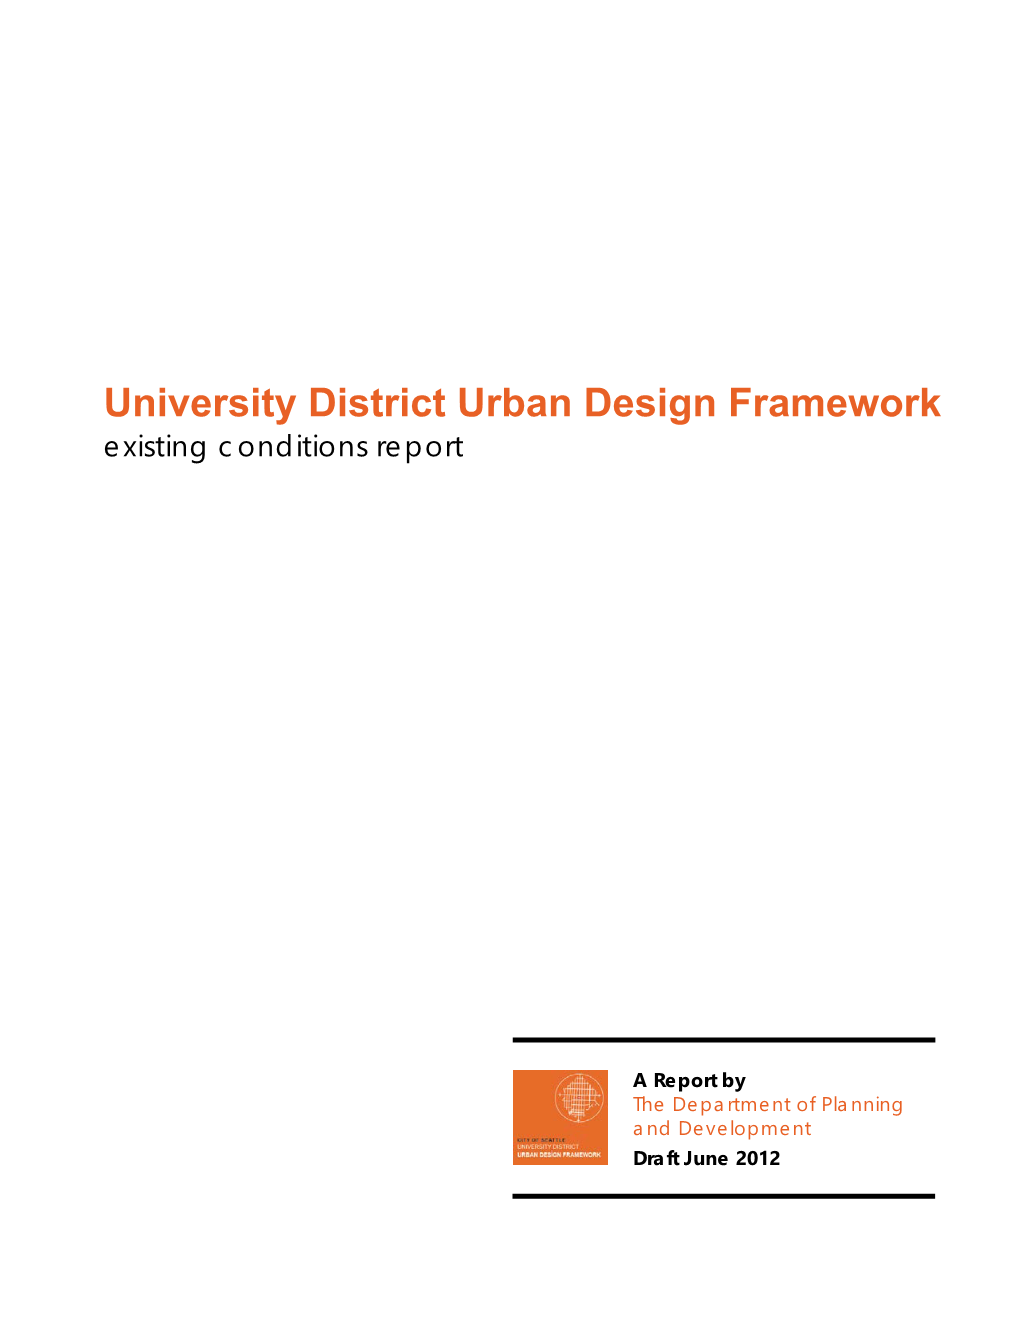 University District Urban Design Framework Existing Conditions Report